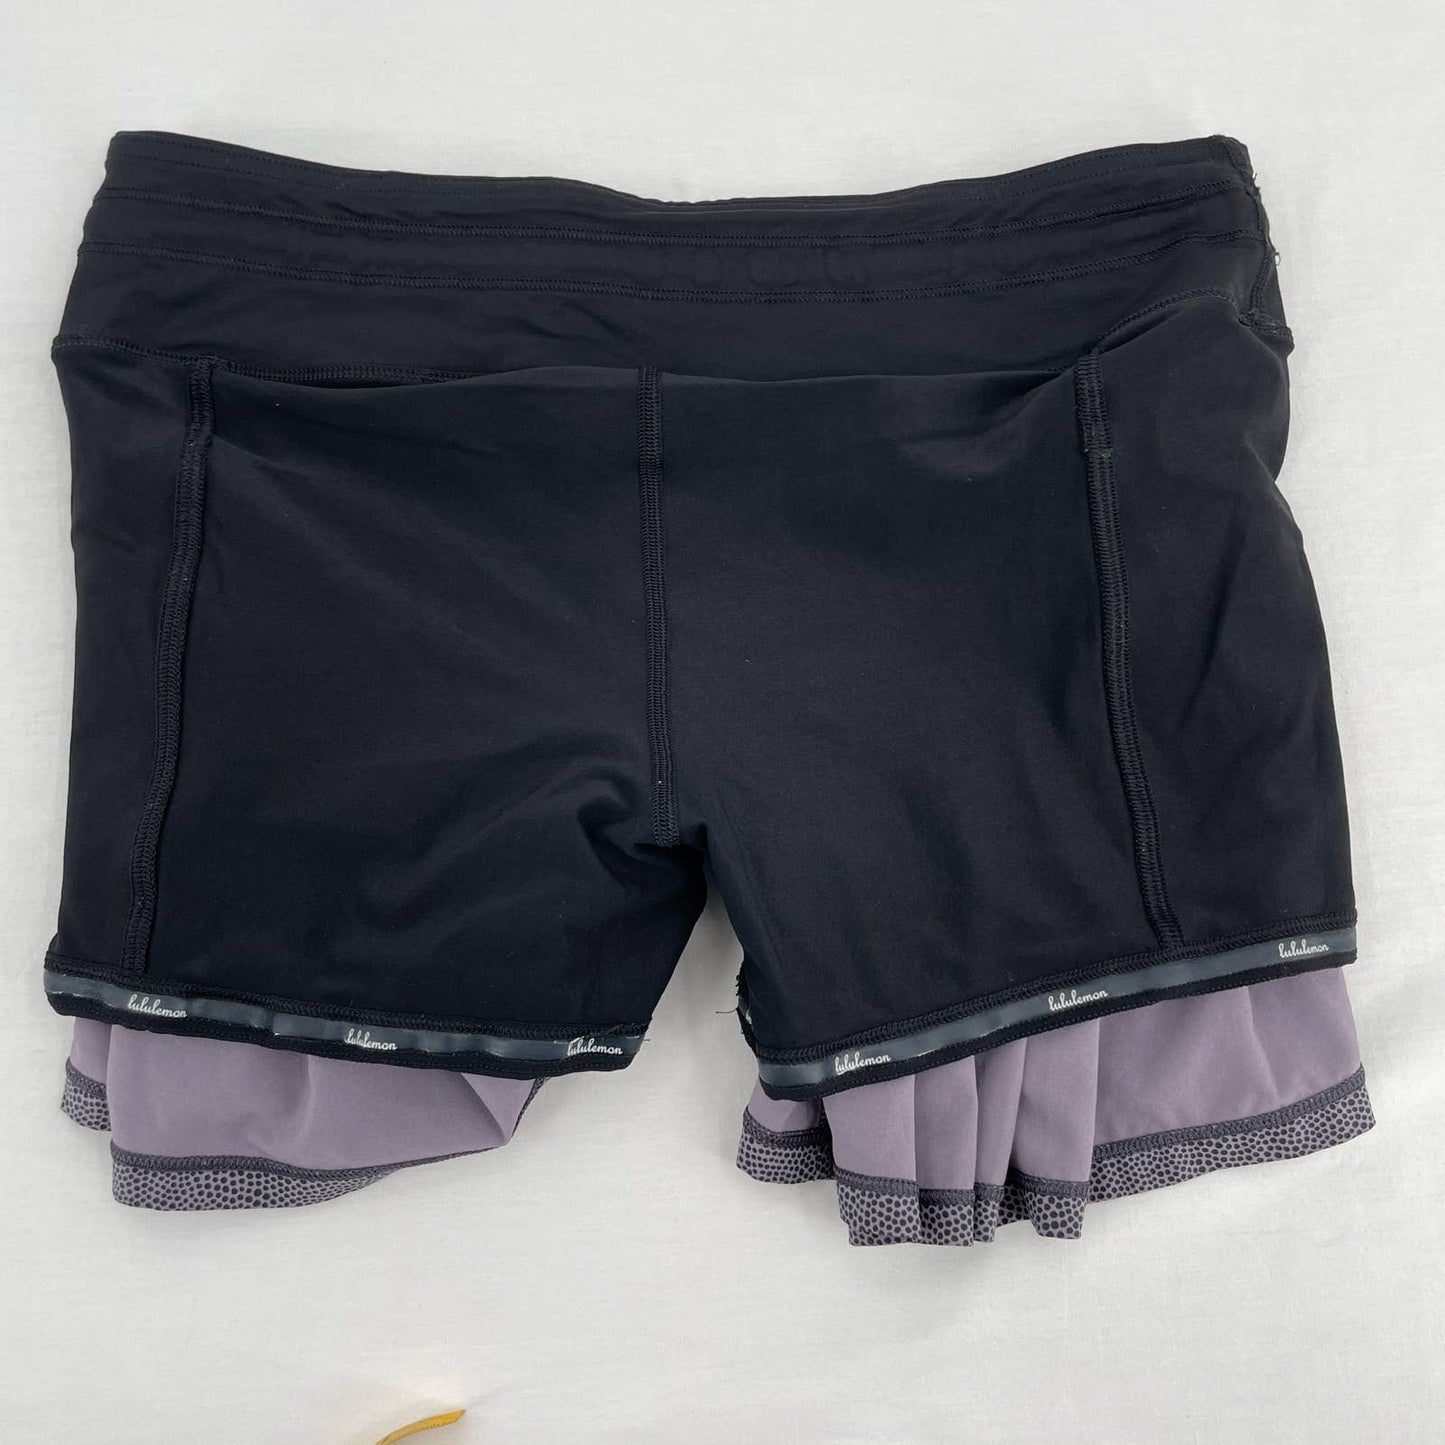 Lululemon Circuit Breaker II Skirt Disperse Dusky Lavender Purple Grey Skort Size 6